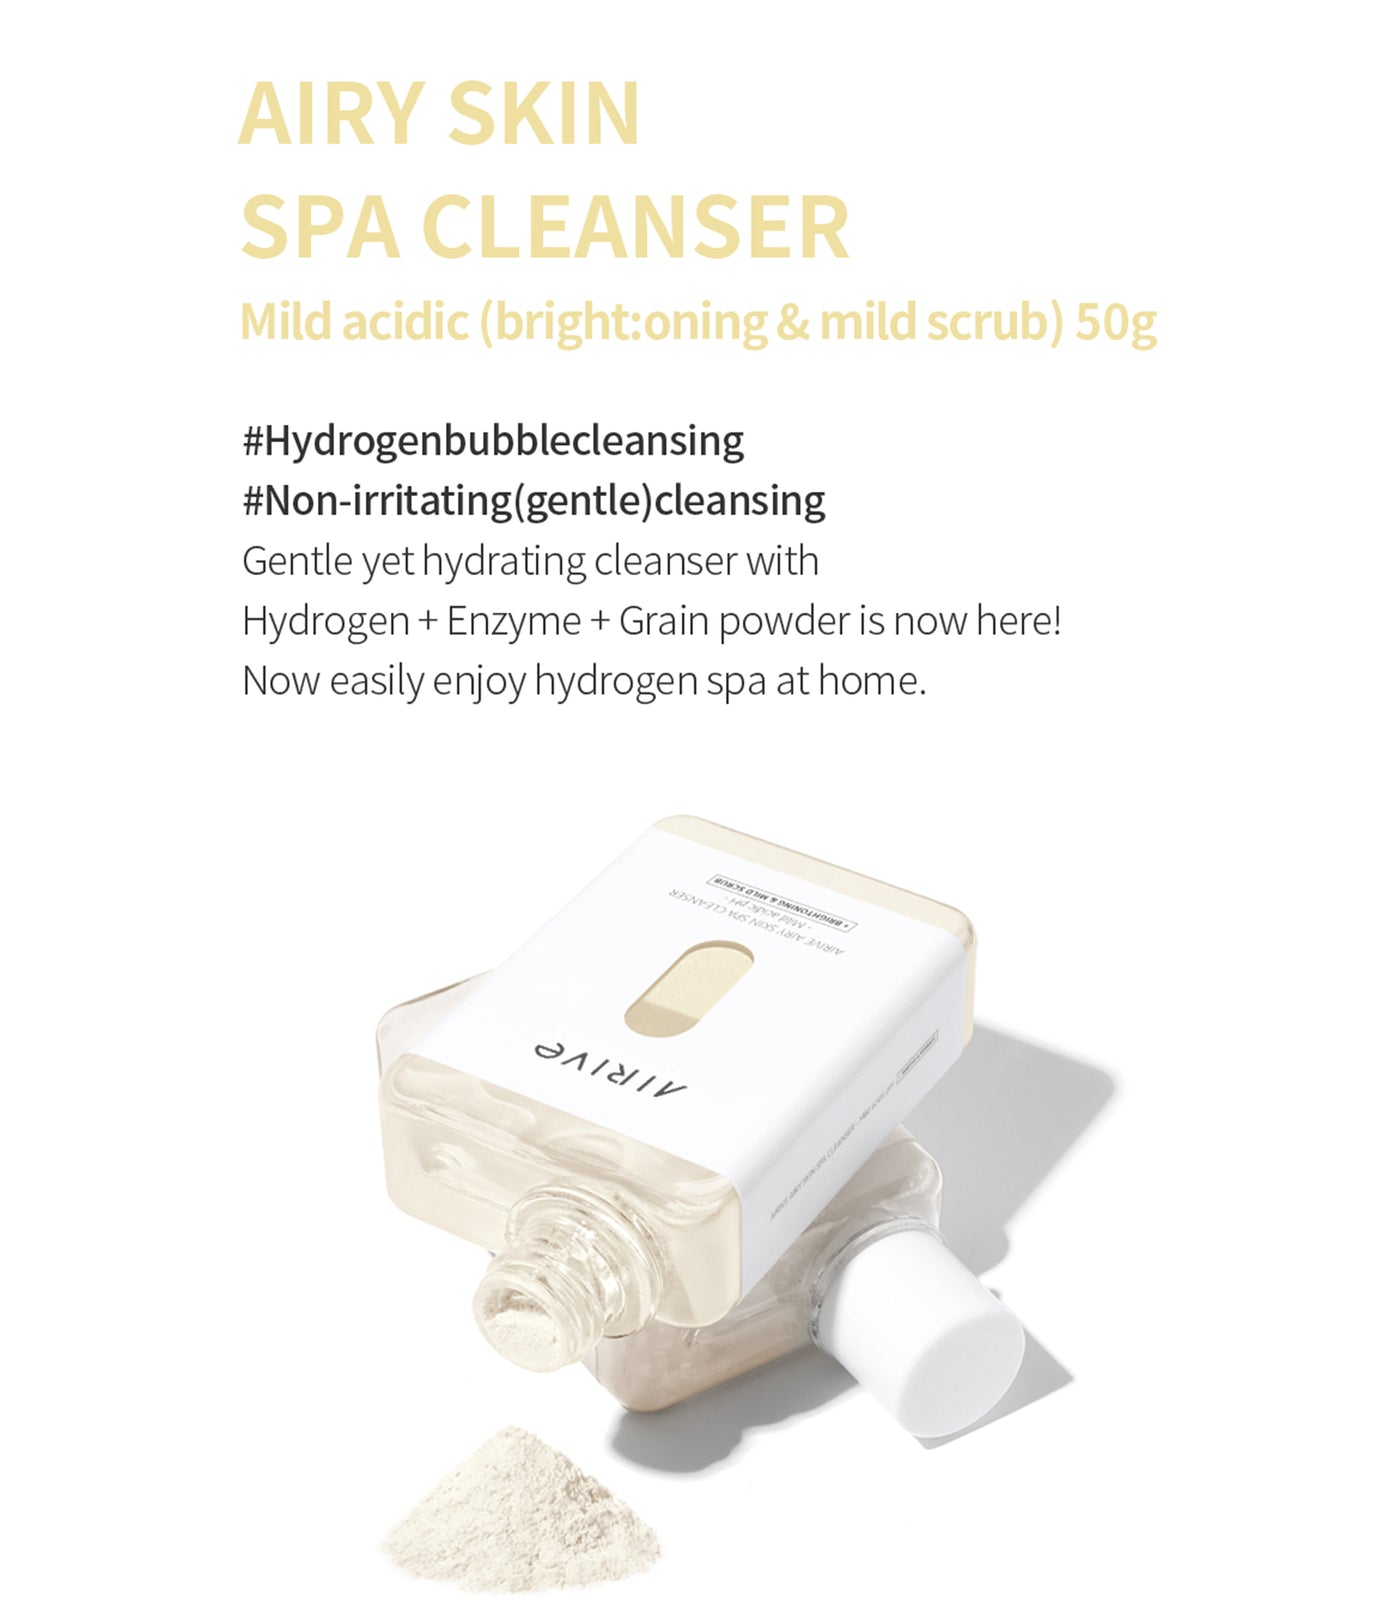 AIRIVE Airy Skin Spa Cleanser - Mild acidic pH + Bright:oning & Mild Scrub (50g)